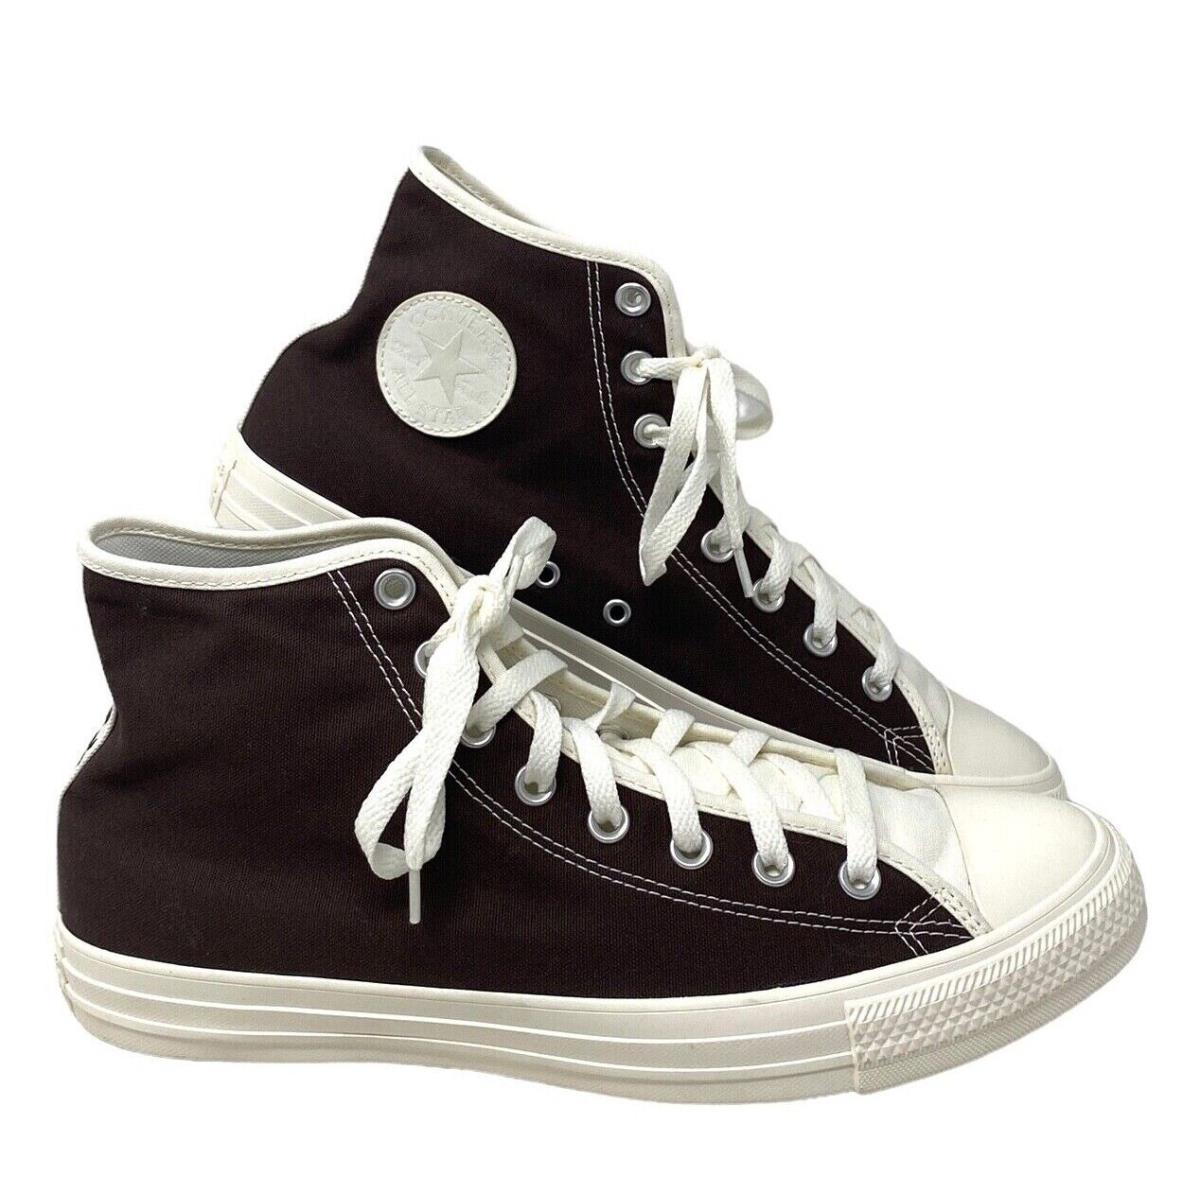 Converse Chuck Taylor High Top Shoes Men White Brown Canvas Custom 152620C-WBRW